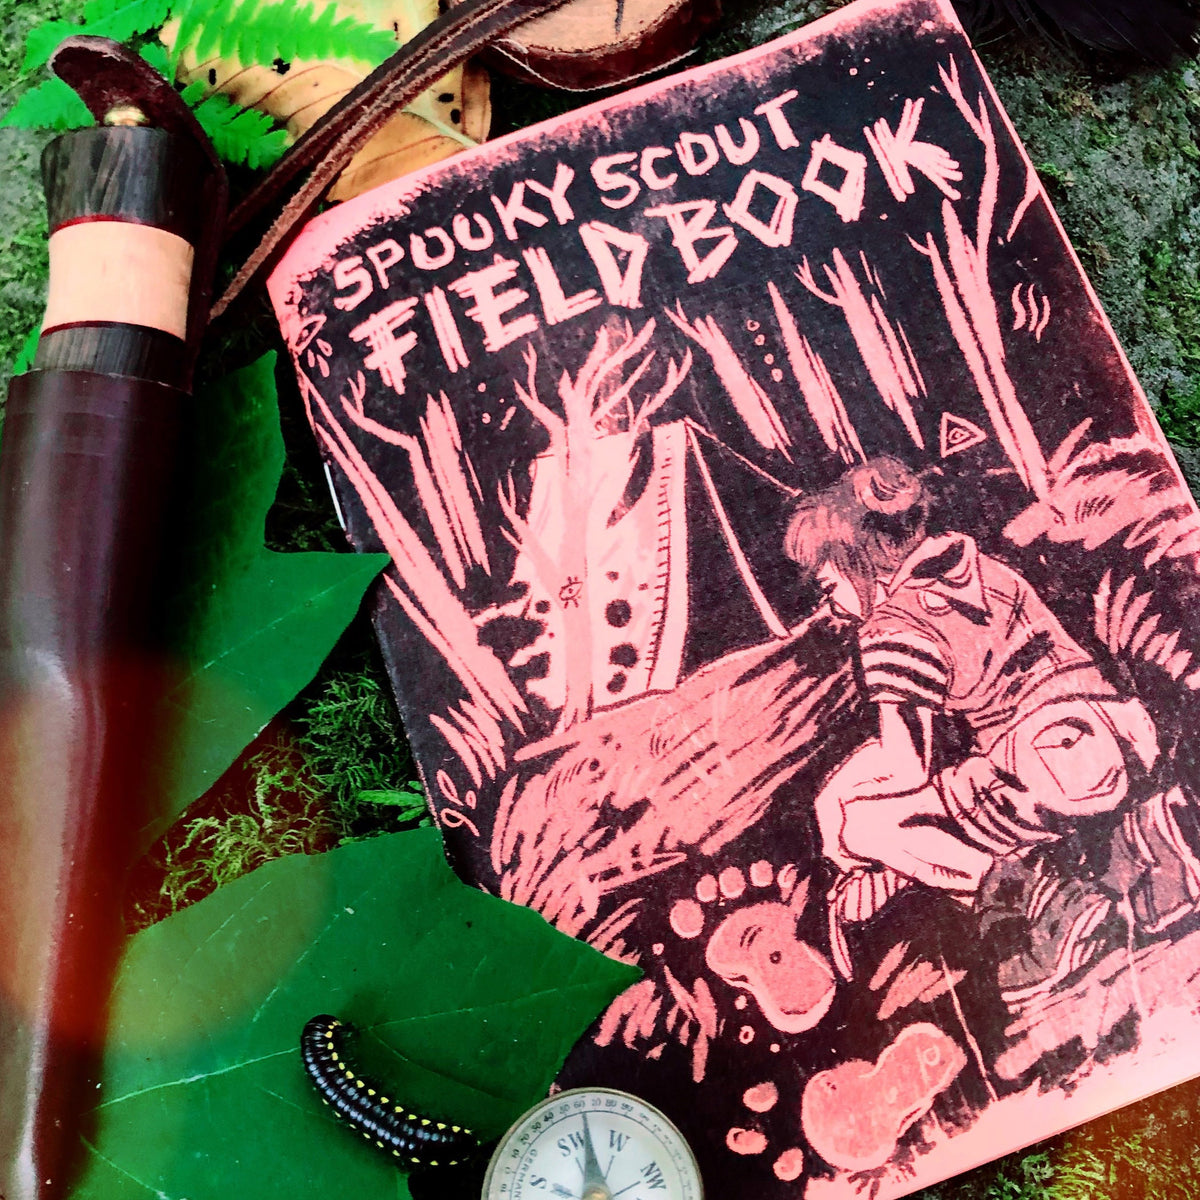 Spooky Scout Field Book - Physical copy zine w/Sticker!